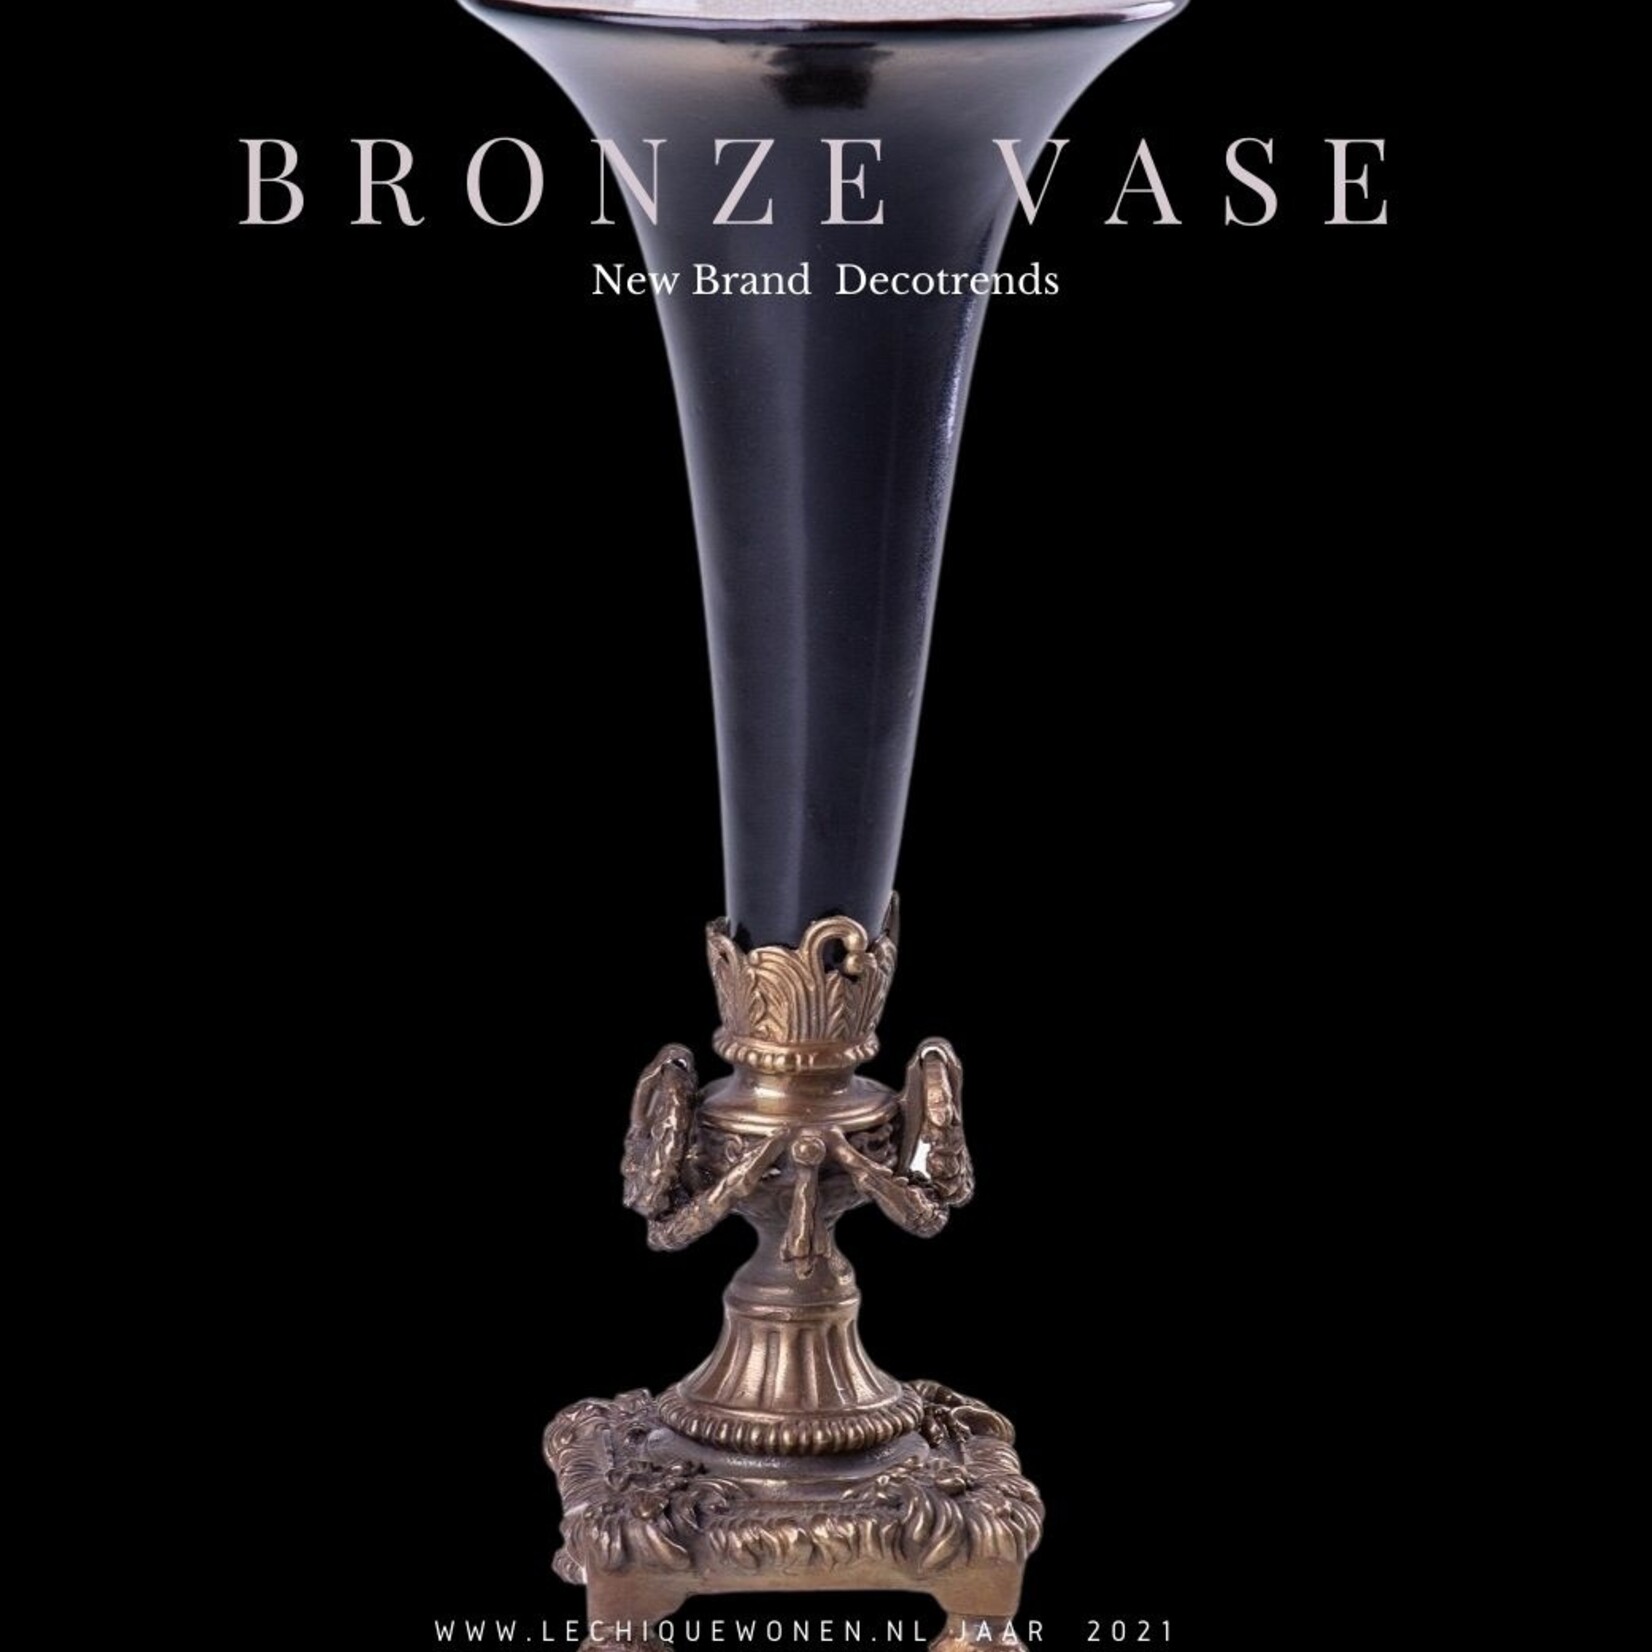 Decotrends  Porcelain with bronze vase / candlestick